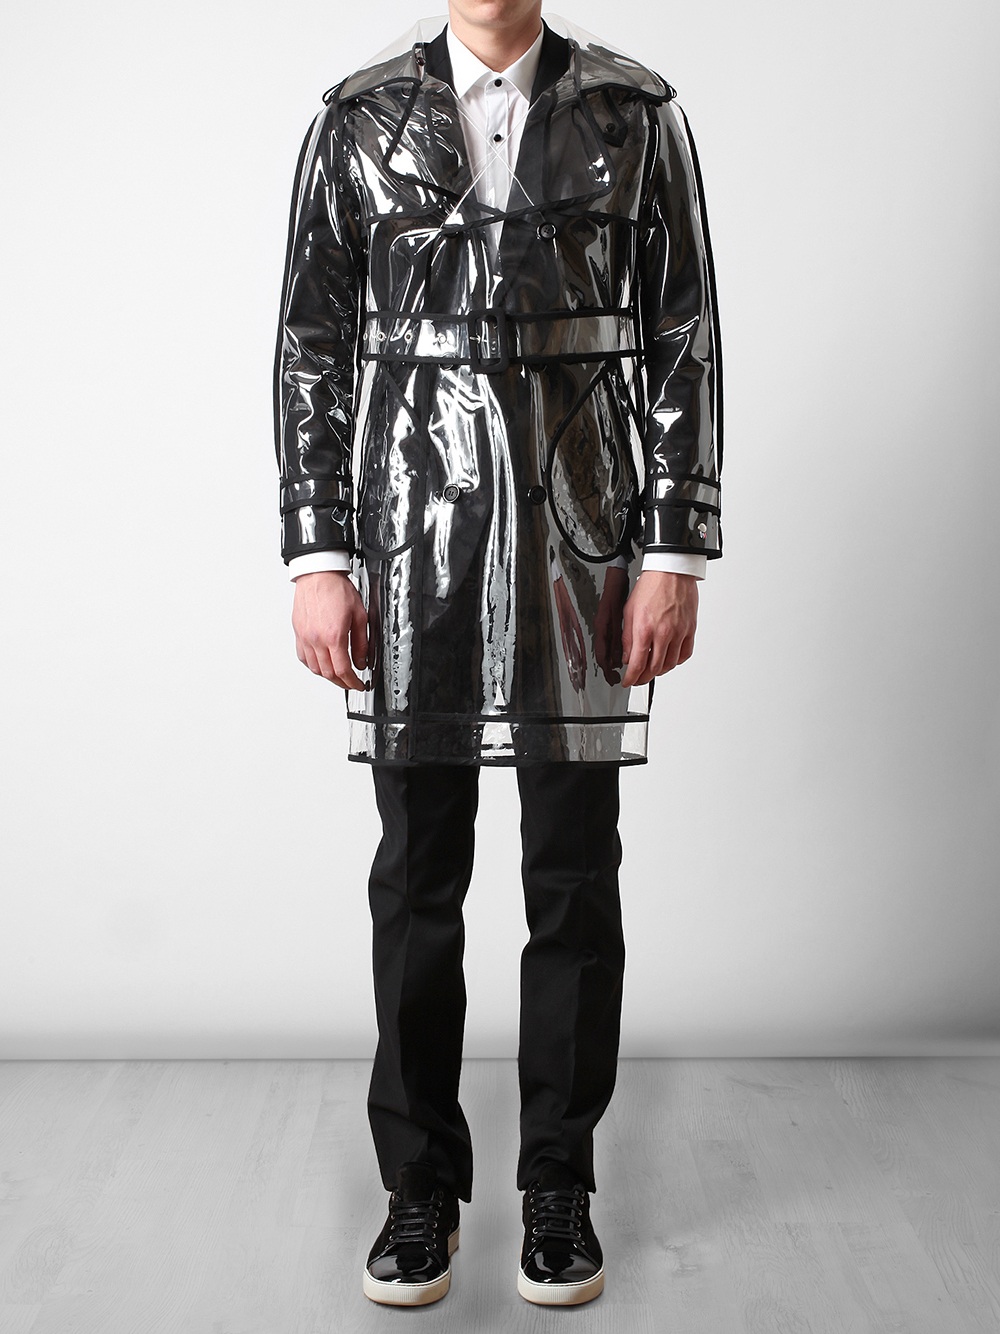 Wanda Nylon Transparent Pvc Trench Coat for Men - Lyst